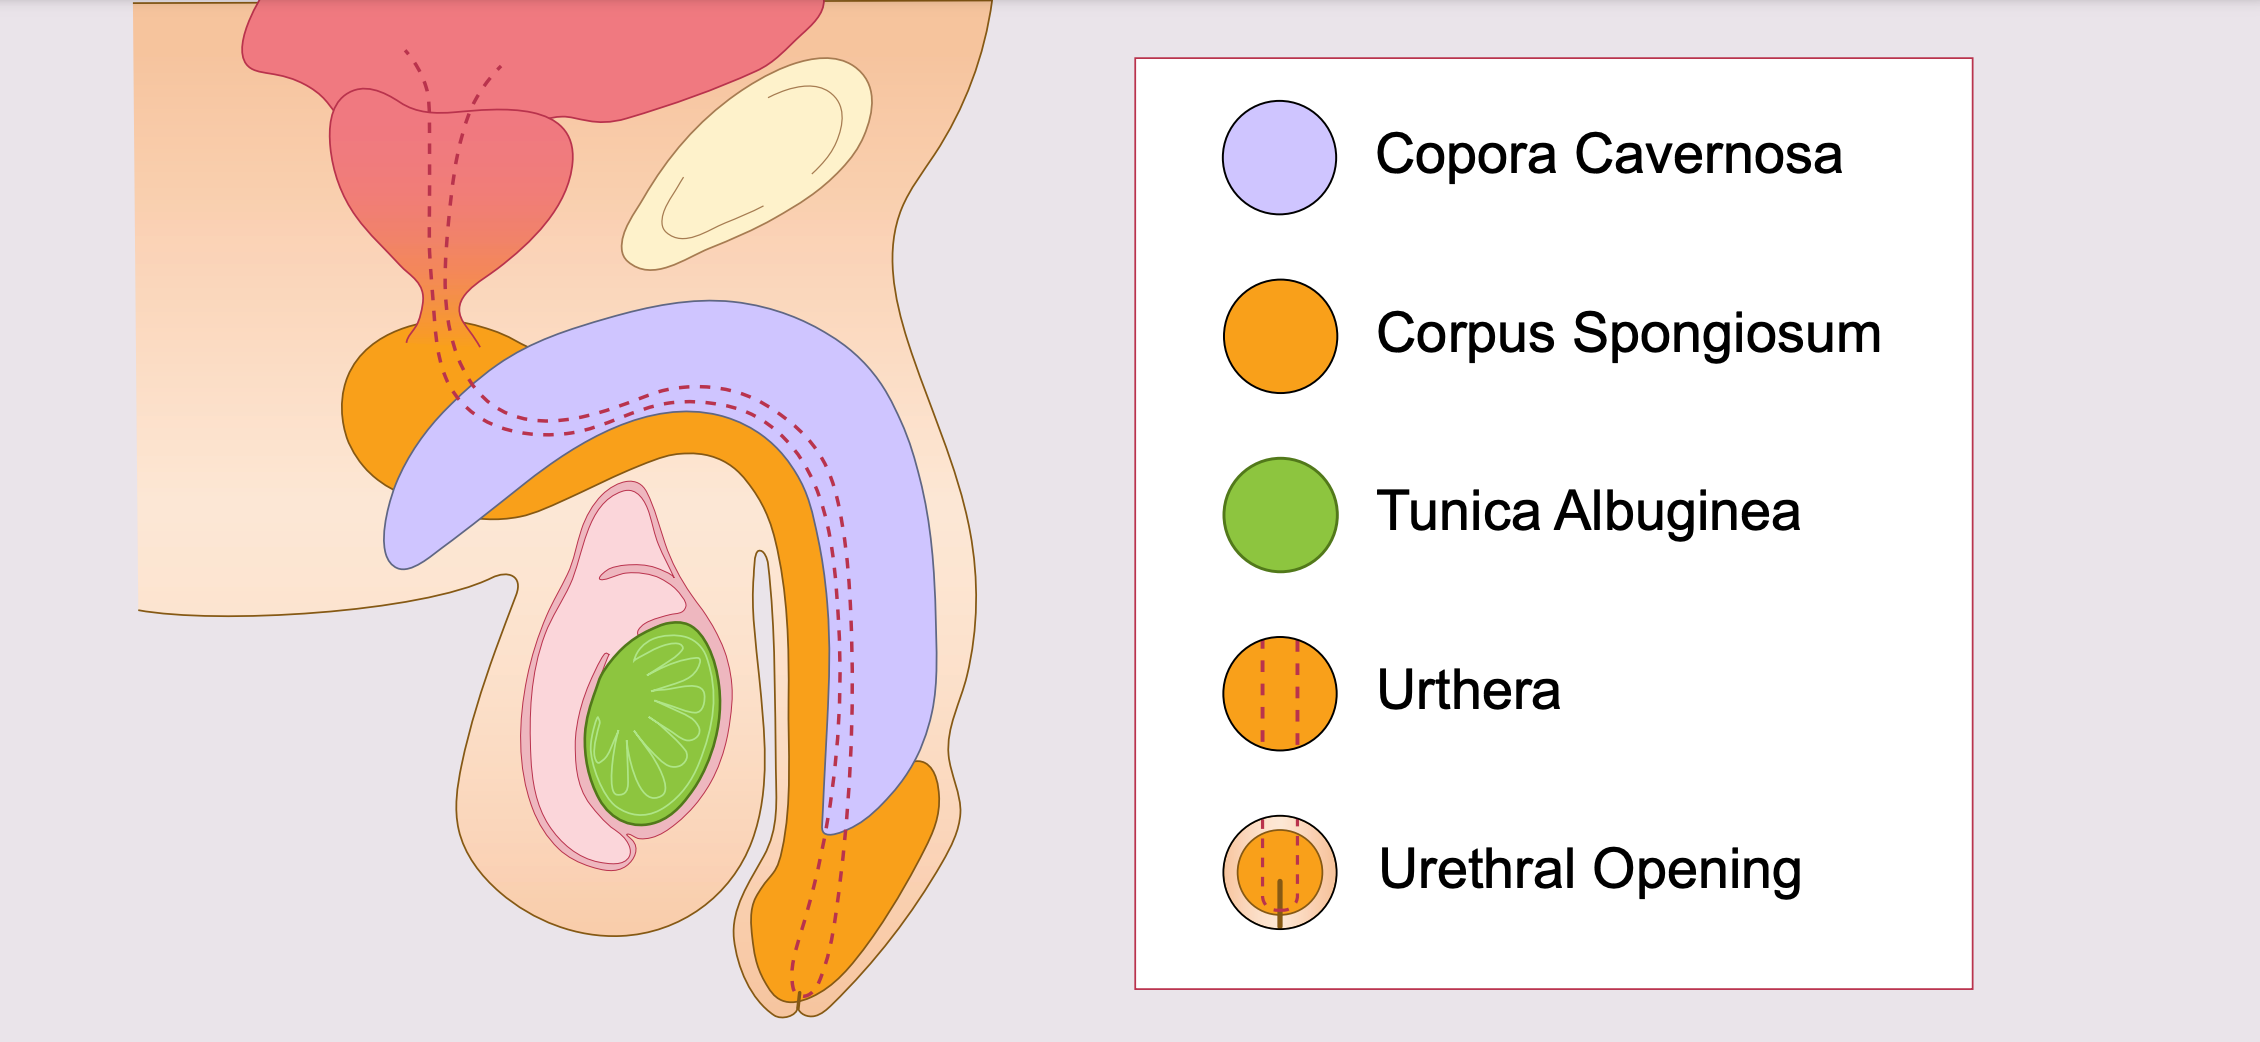 Illustration of the penile anatomy.